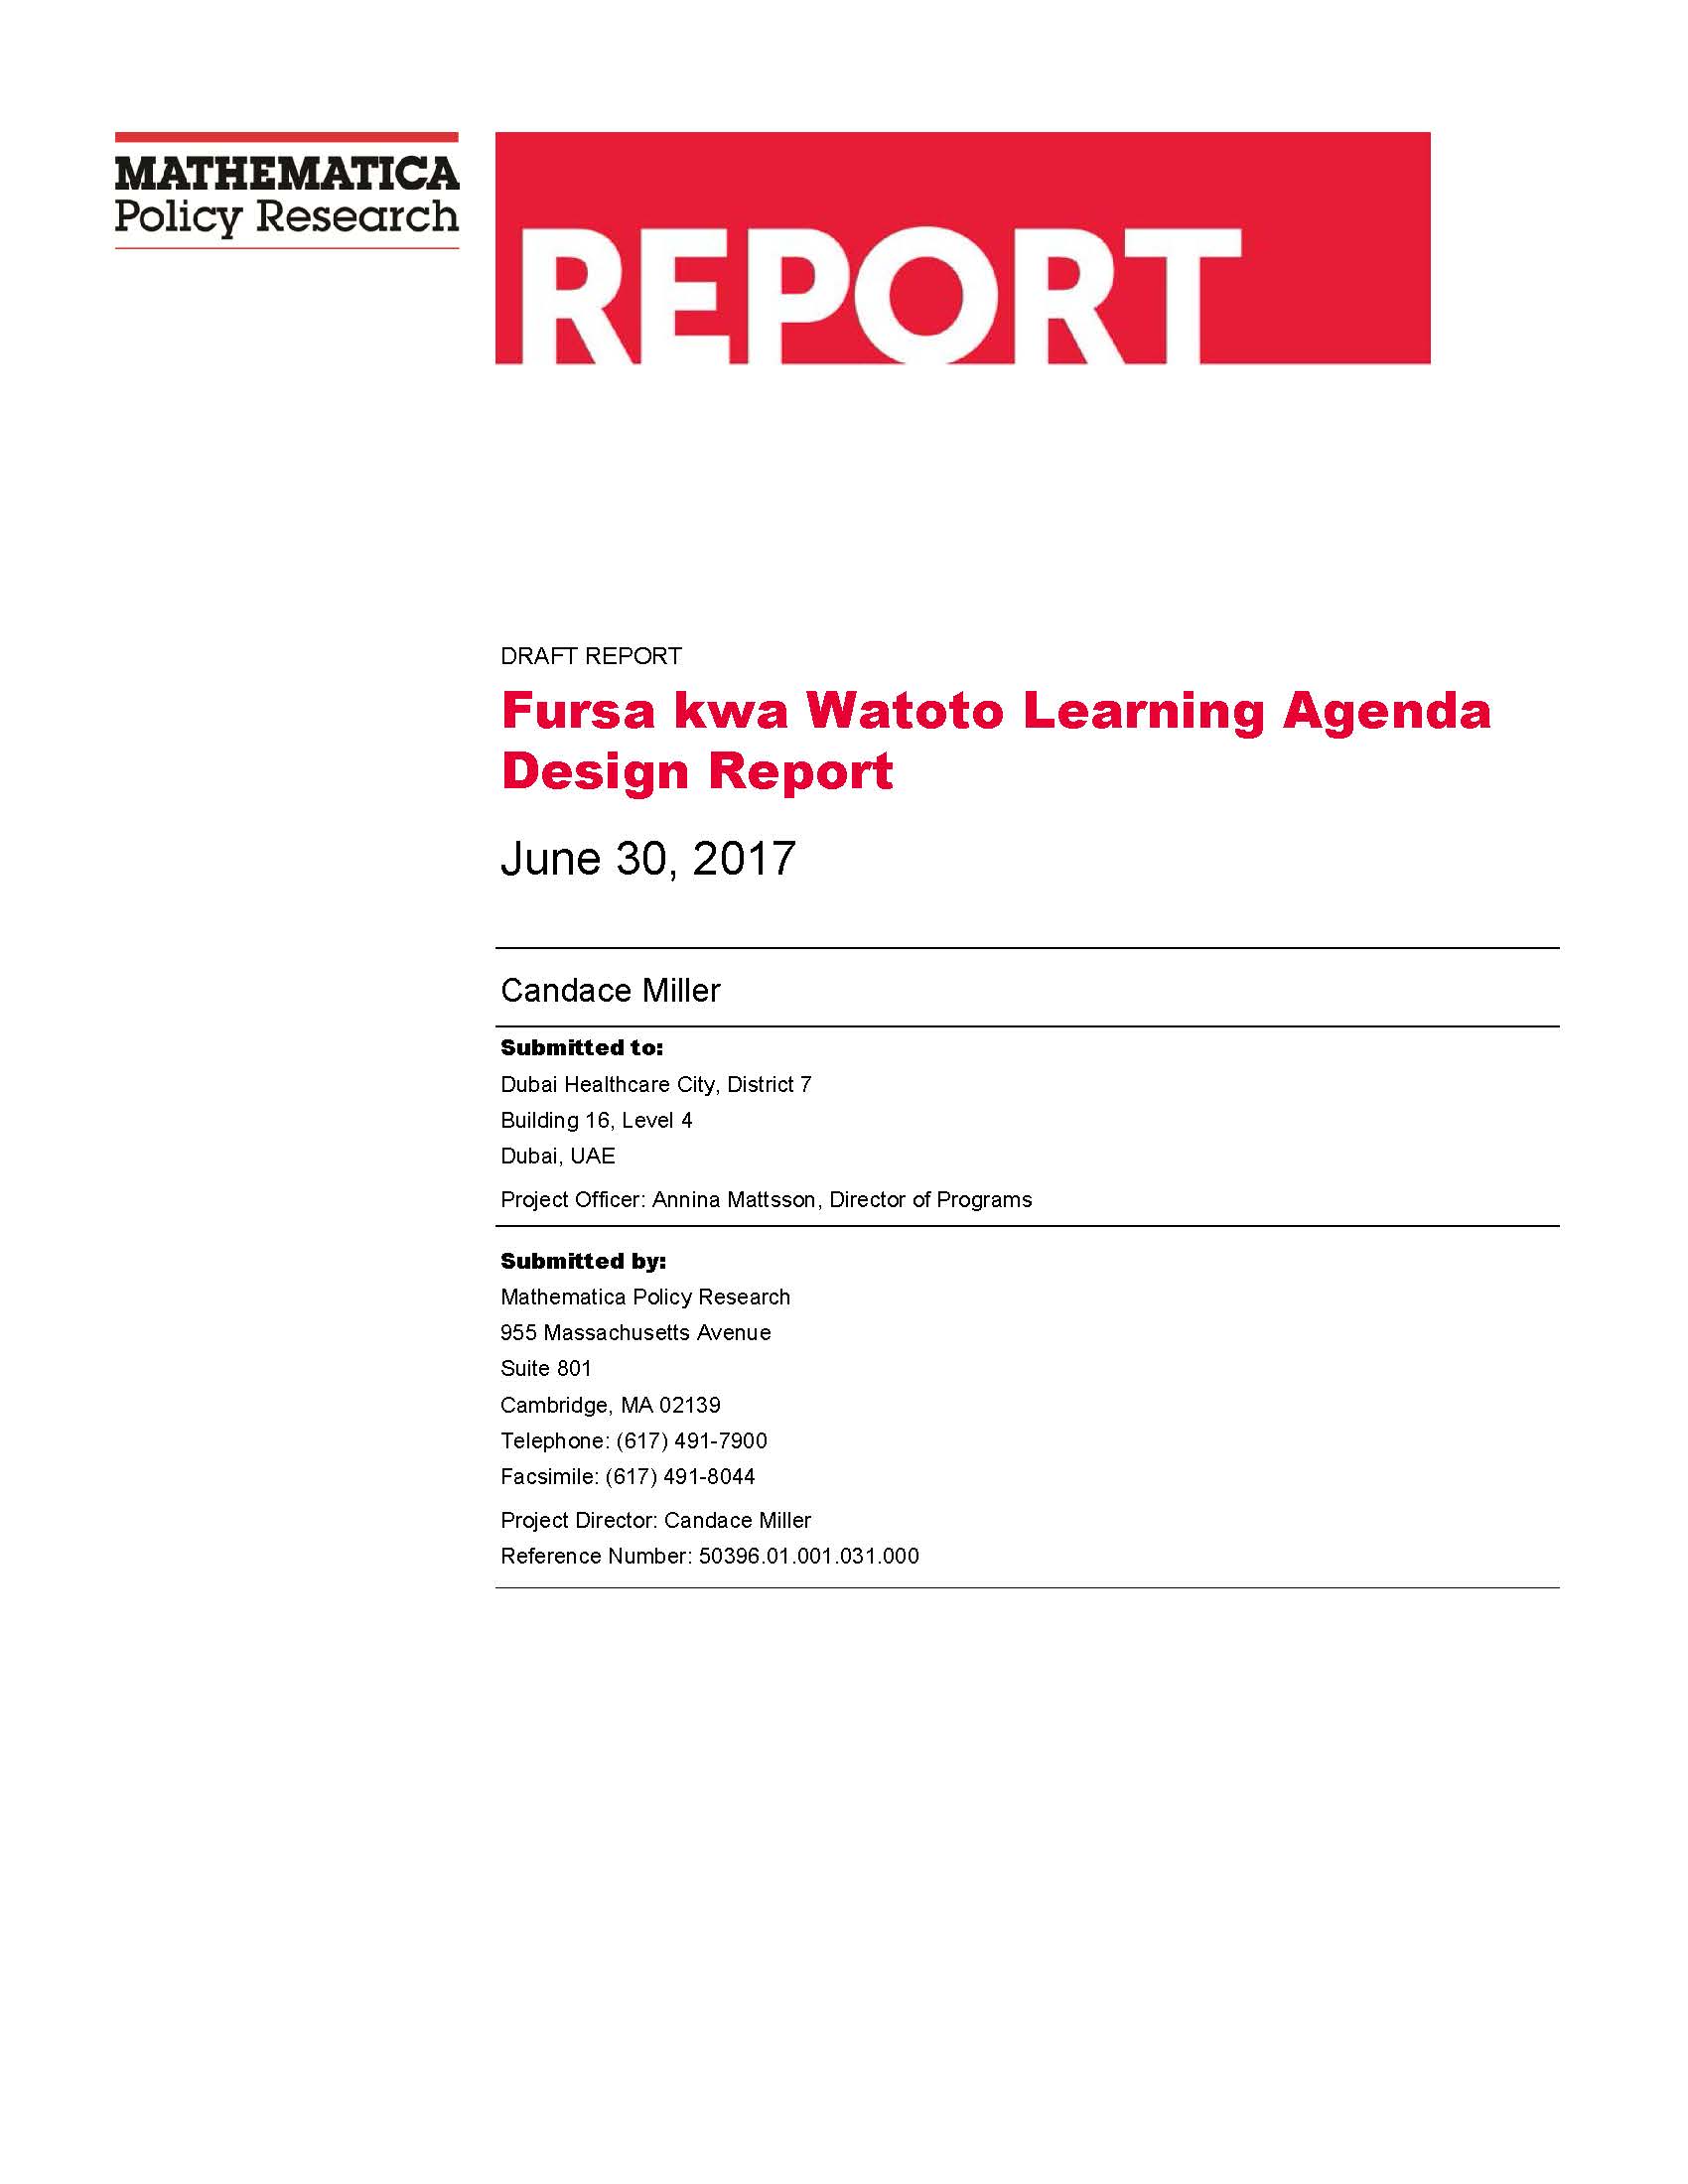 Learning Agenda Design Report